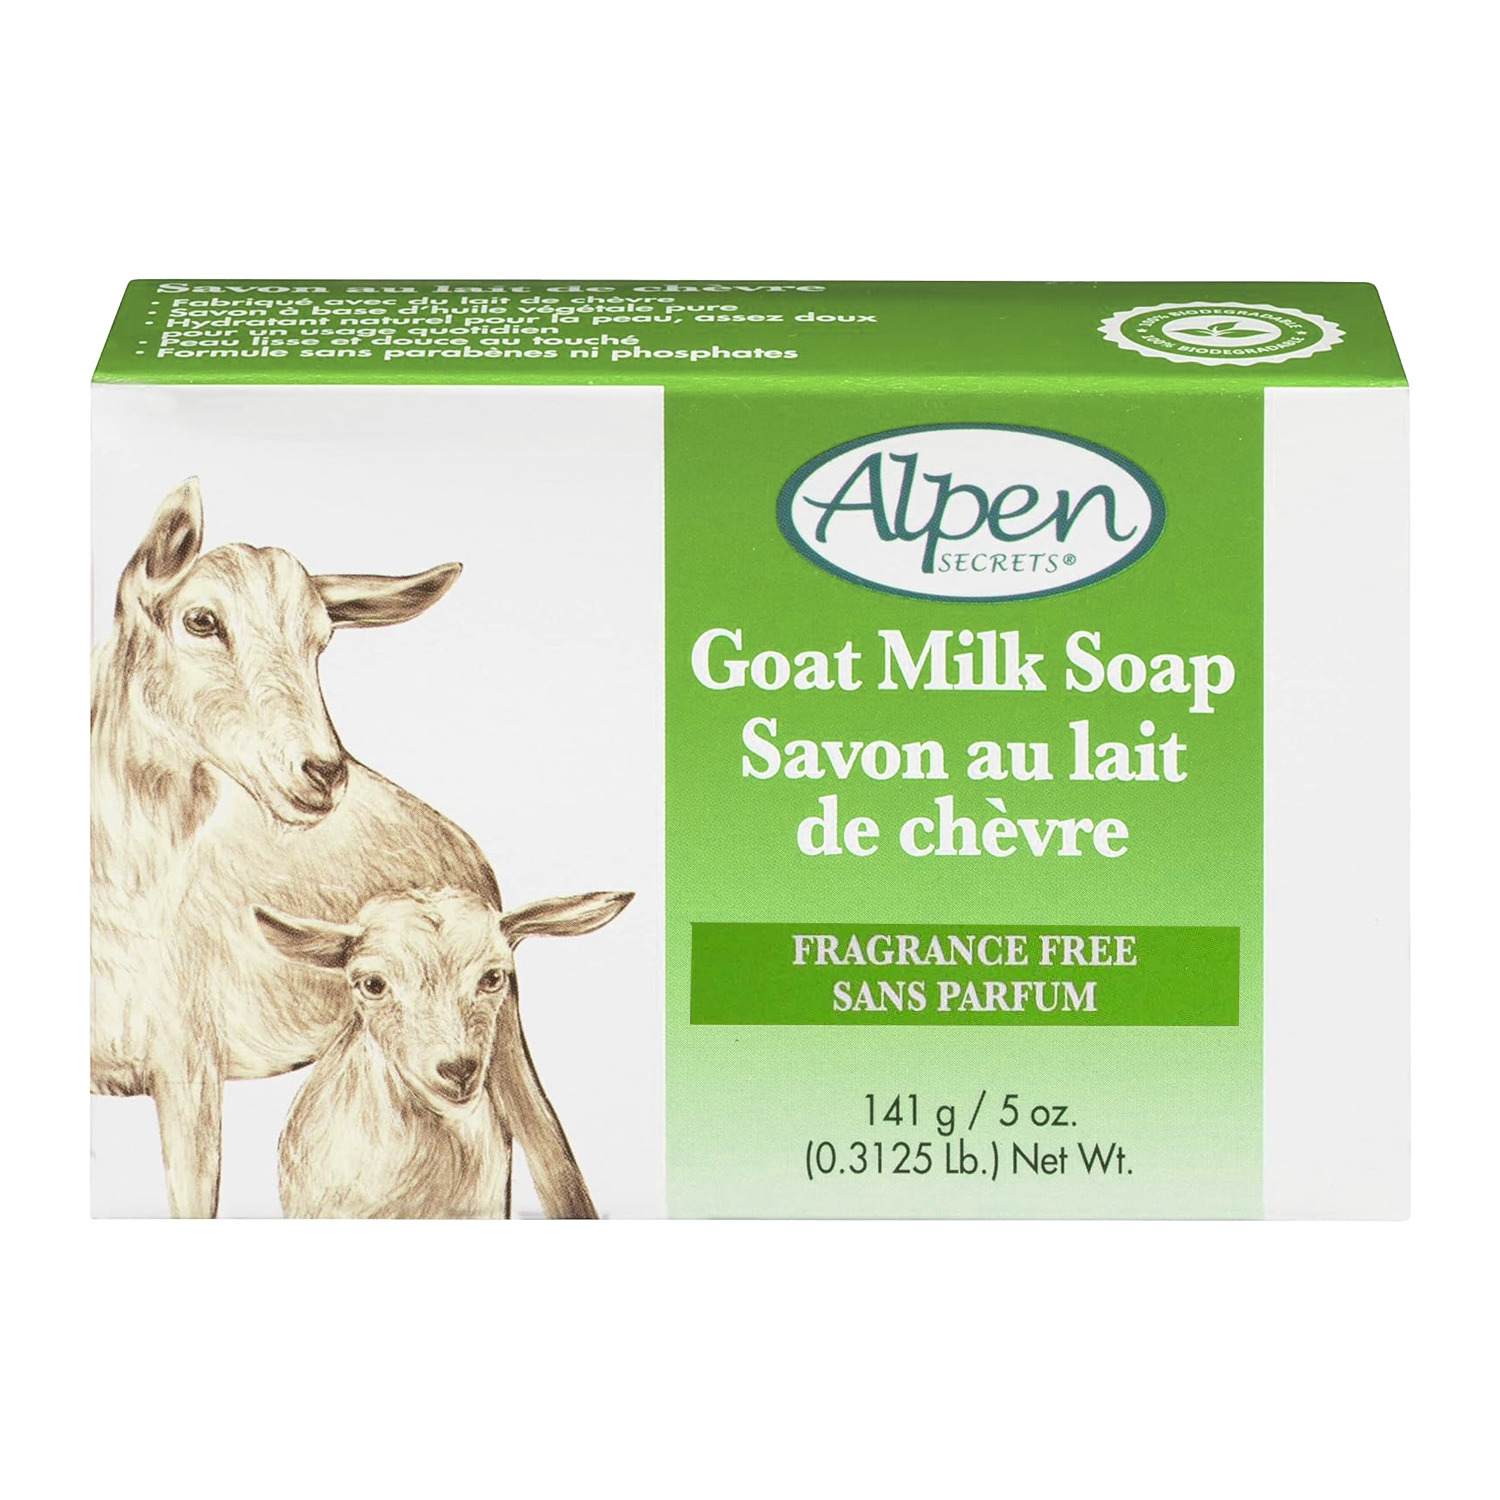 Alpen Secrets - Goat milk soap, 141g - Fragrance free